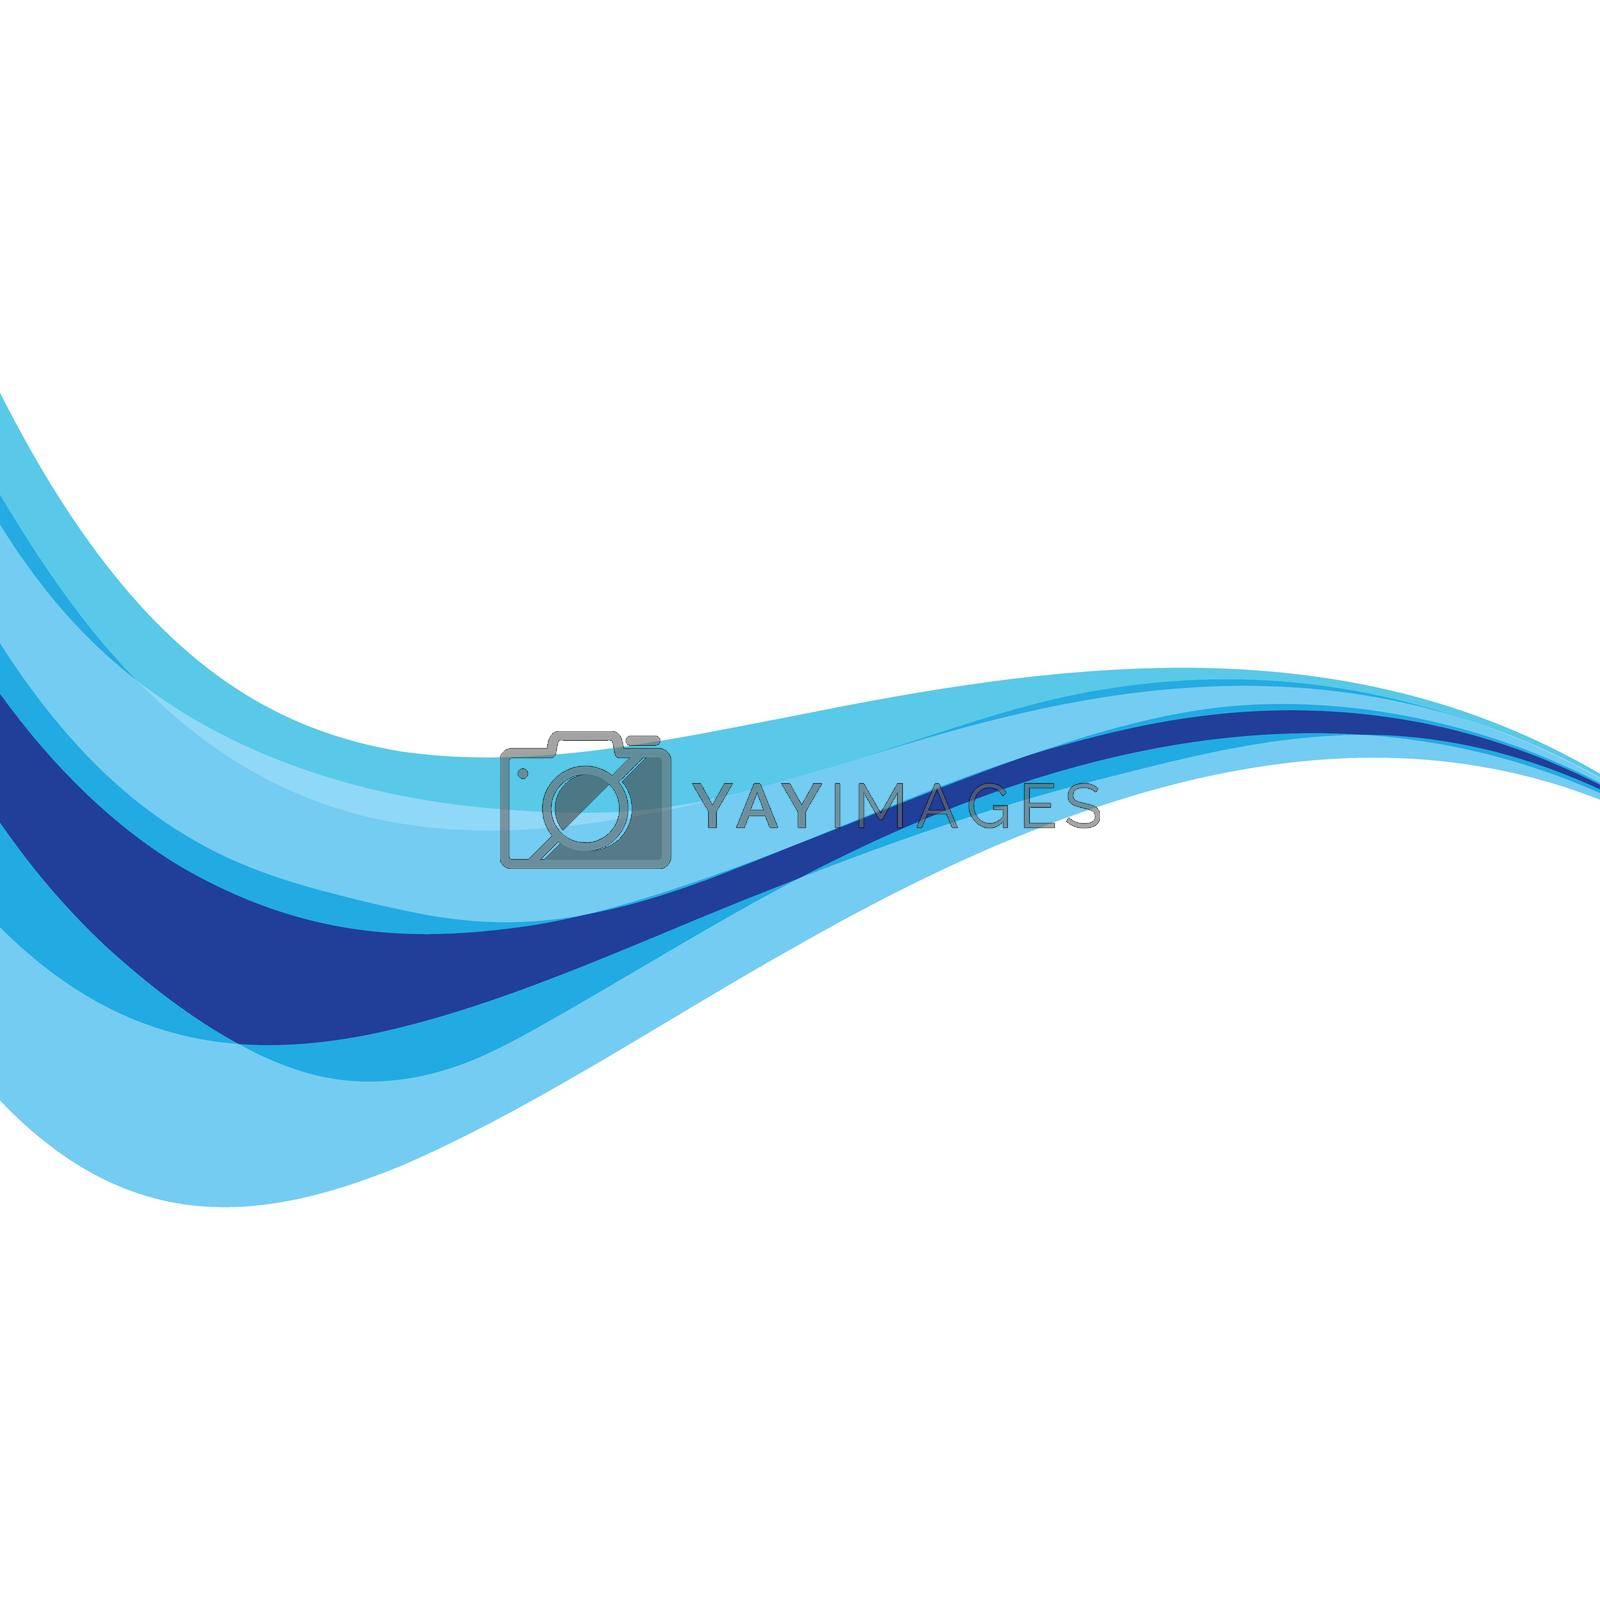 Dynamic texture blue background vector illustration